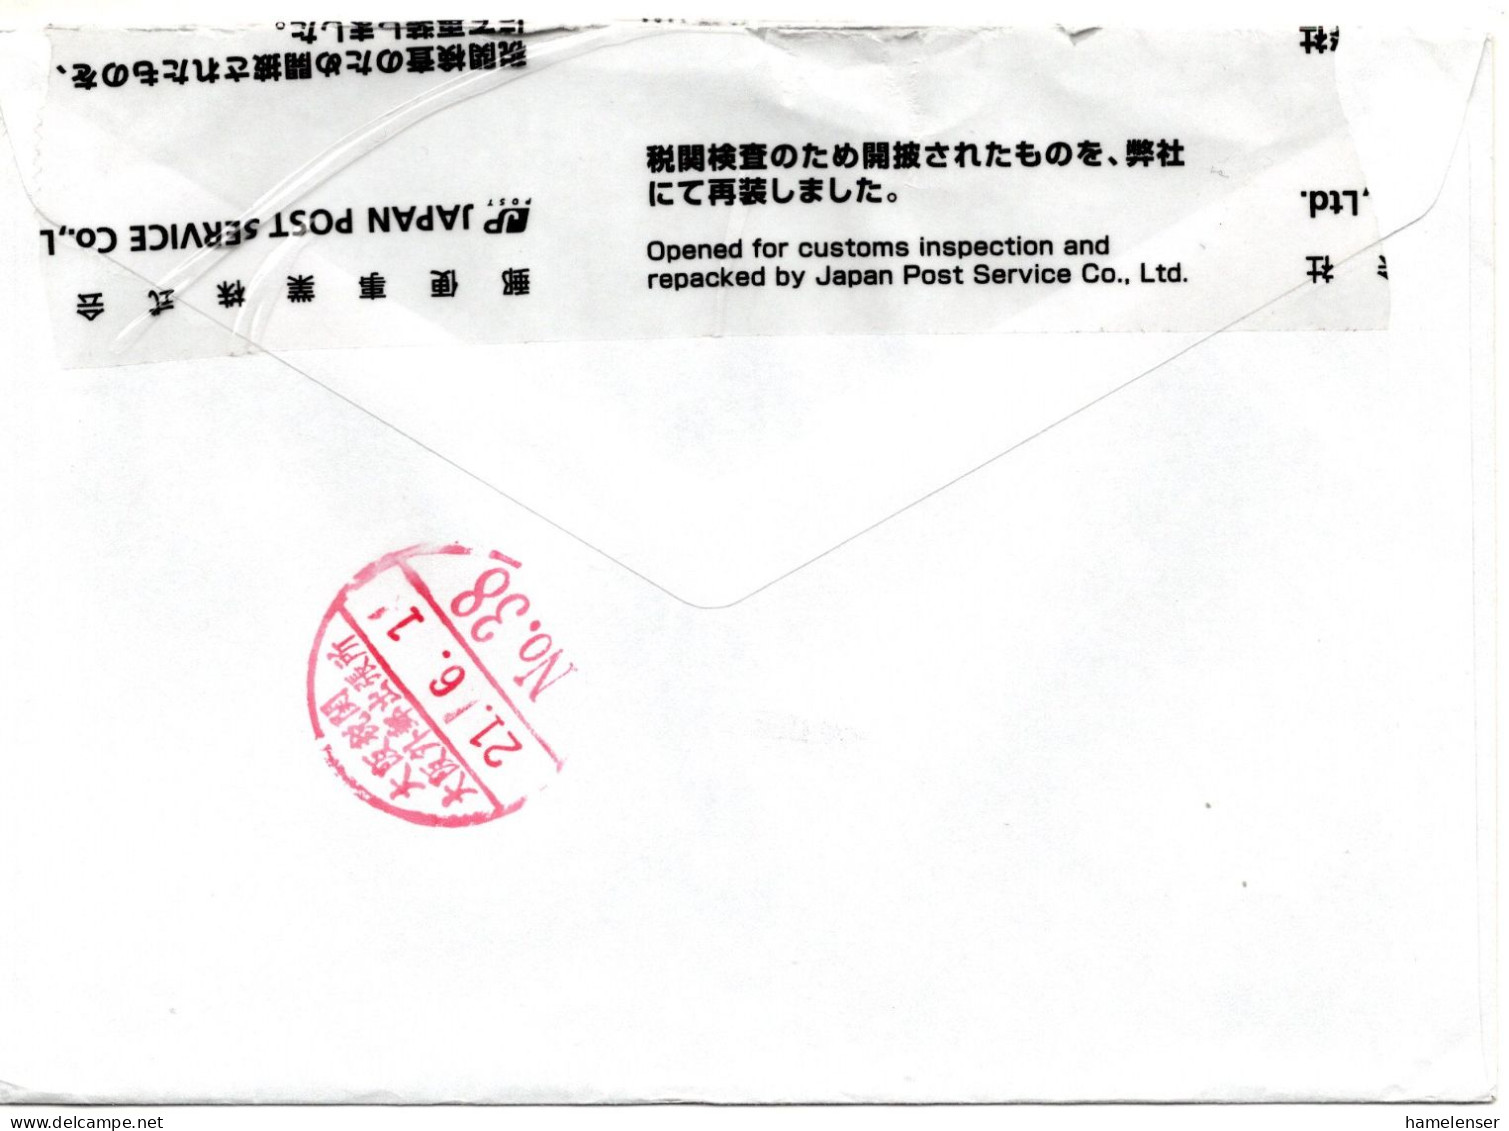 66006 - Niederlande - 2009 - MiF A LpBf Nach Japan, M Niederl Portokontrolle & Japan Zollkontrolle V Zollamt Osaka - Storia Postale